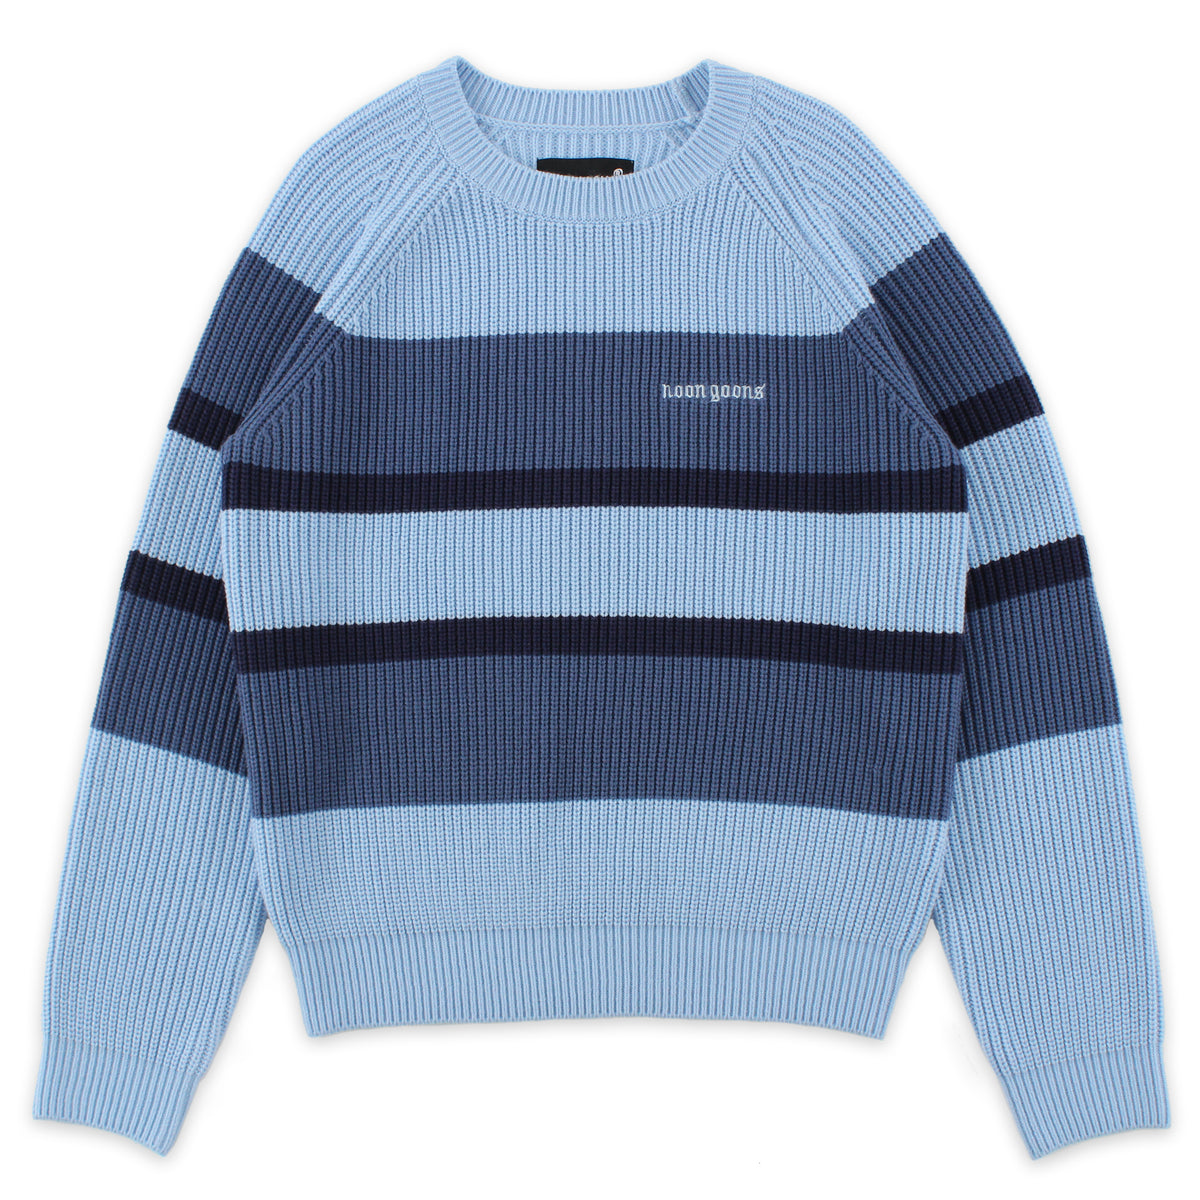 Phat Budde Sweater - Blue